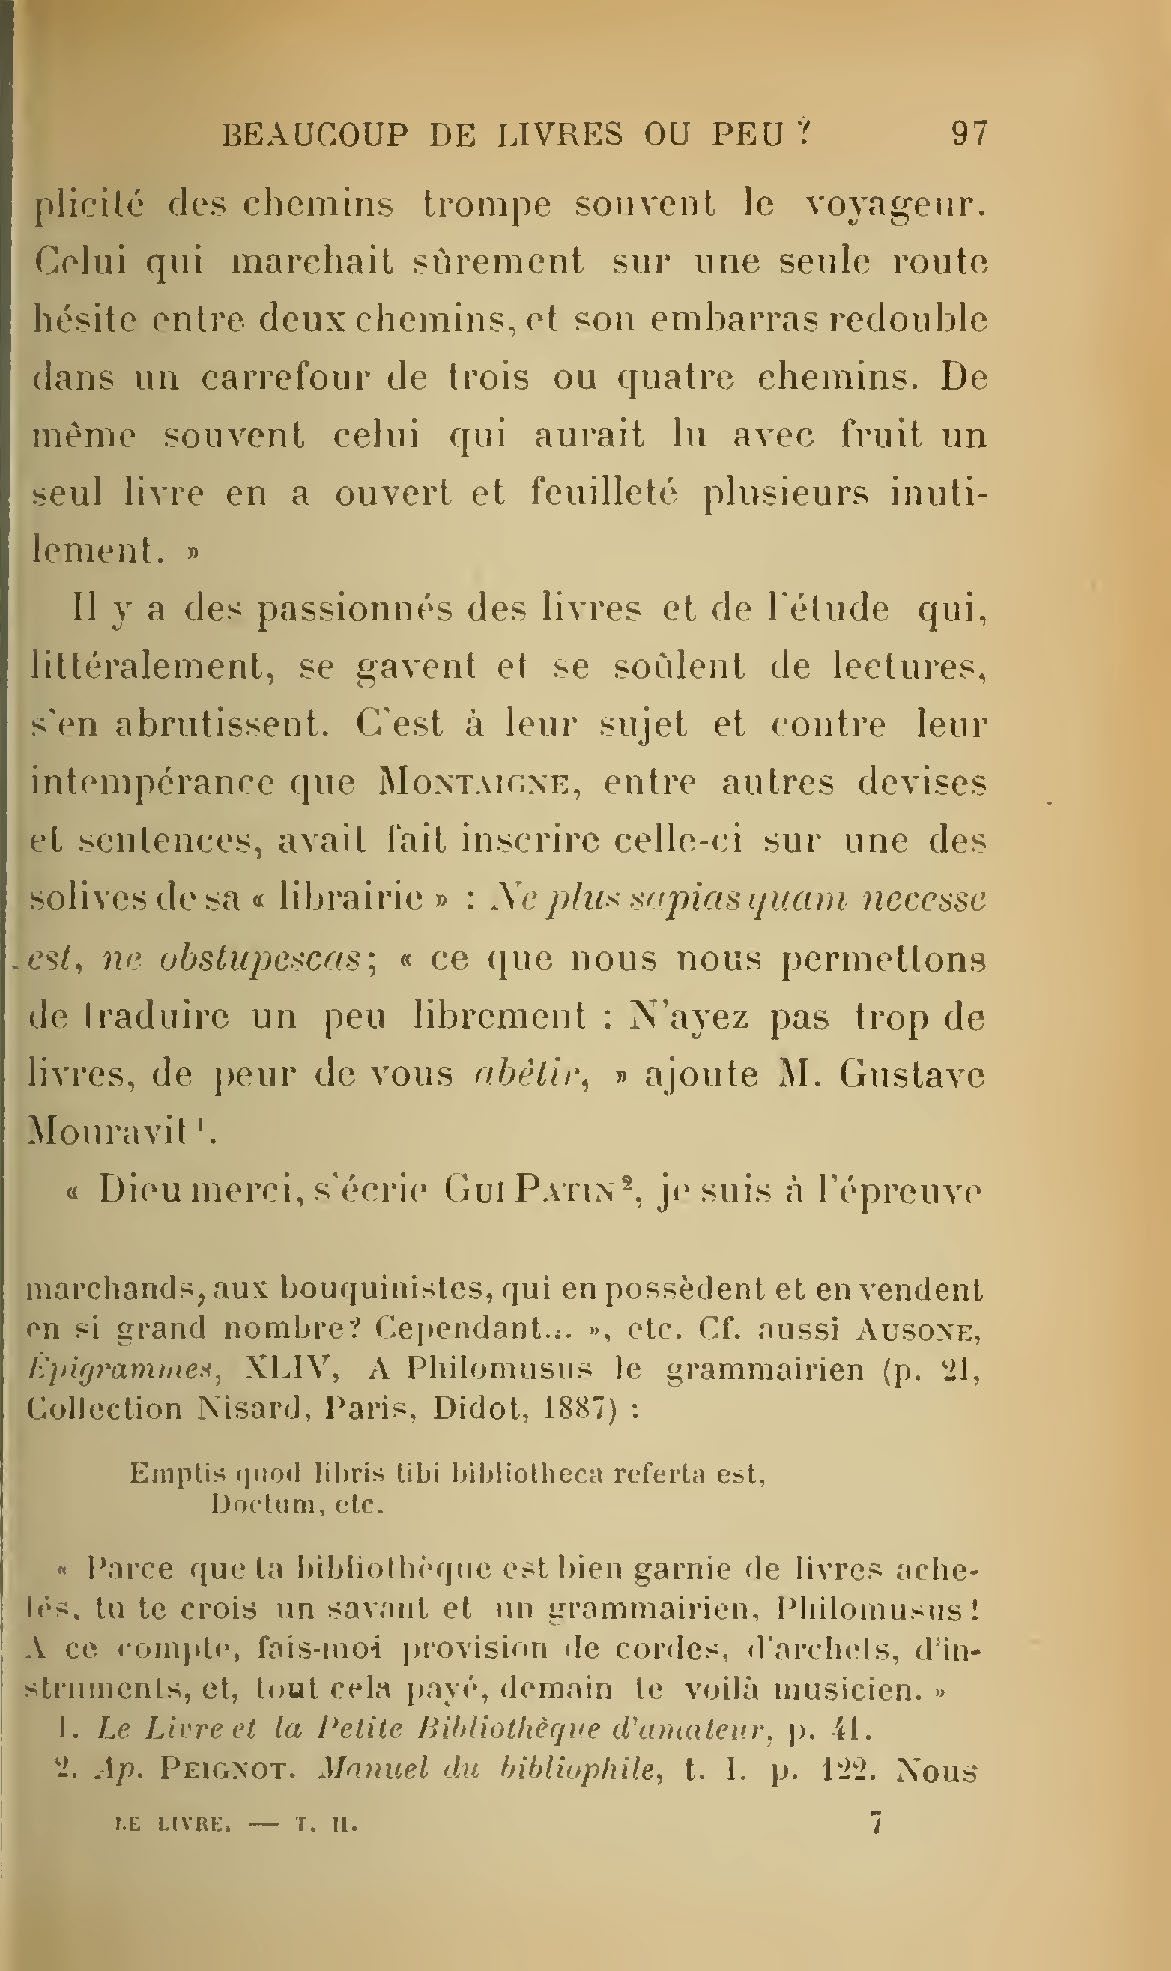 Albert Cim, Le Livre, t. II, p. 097.